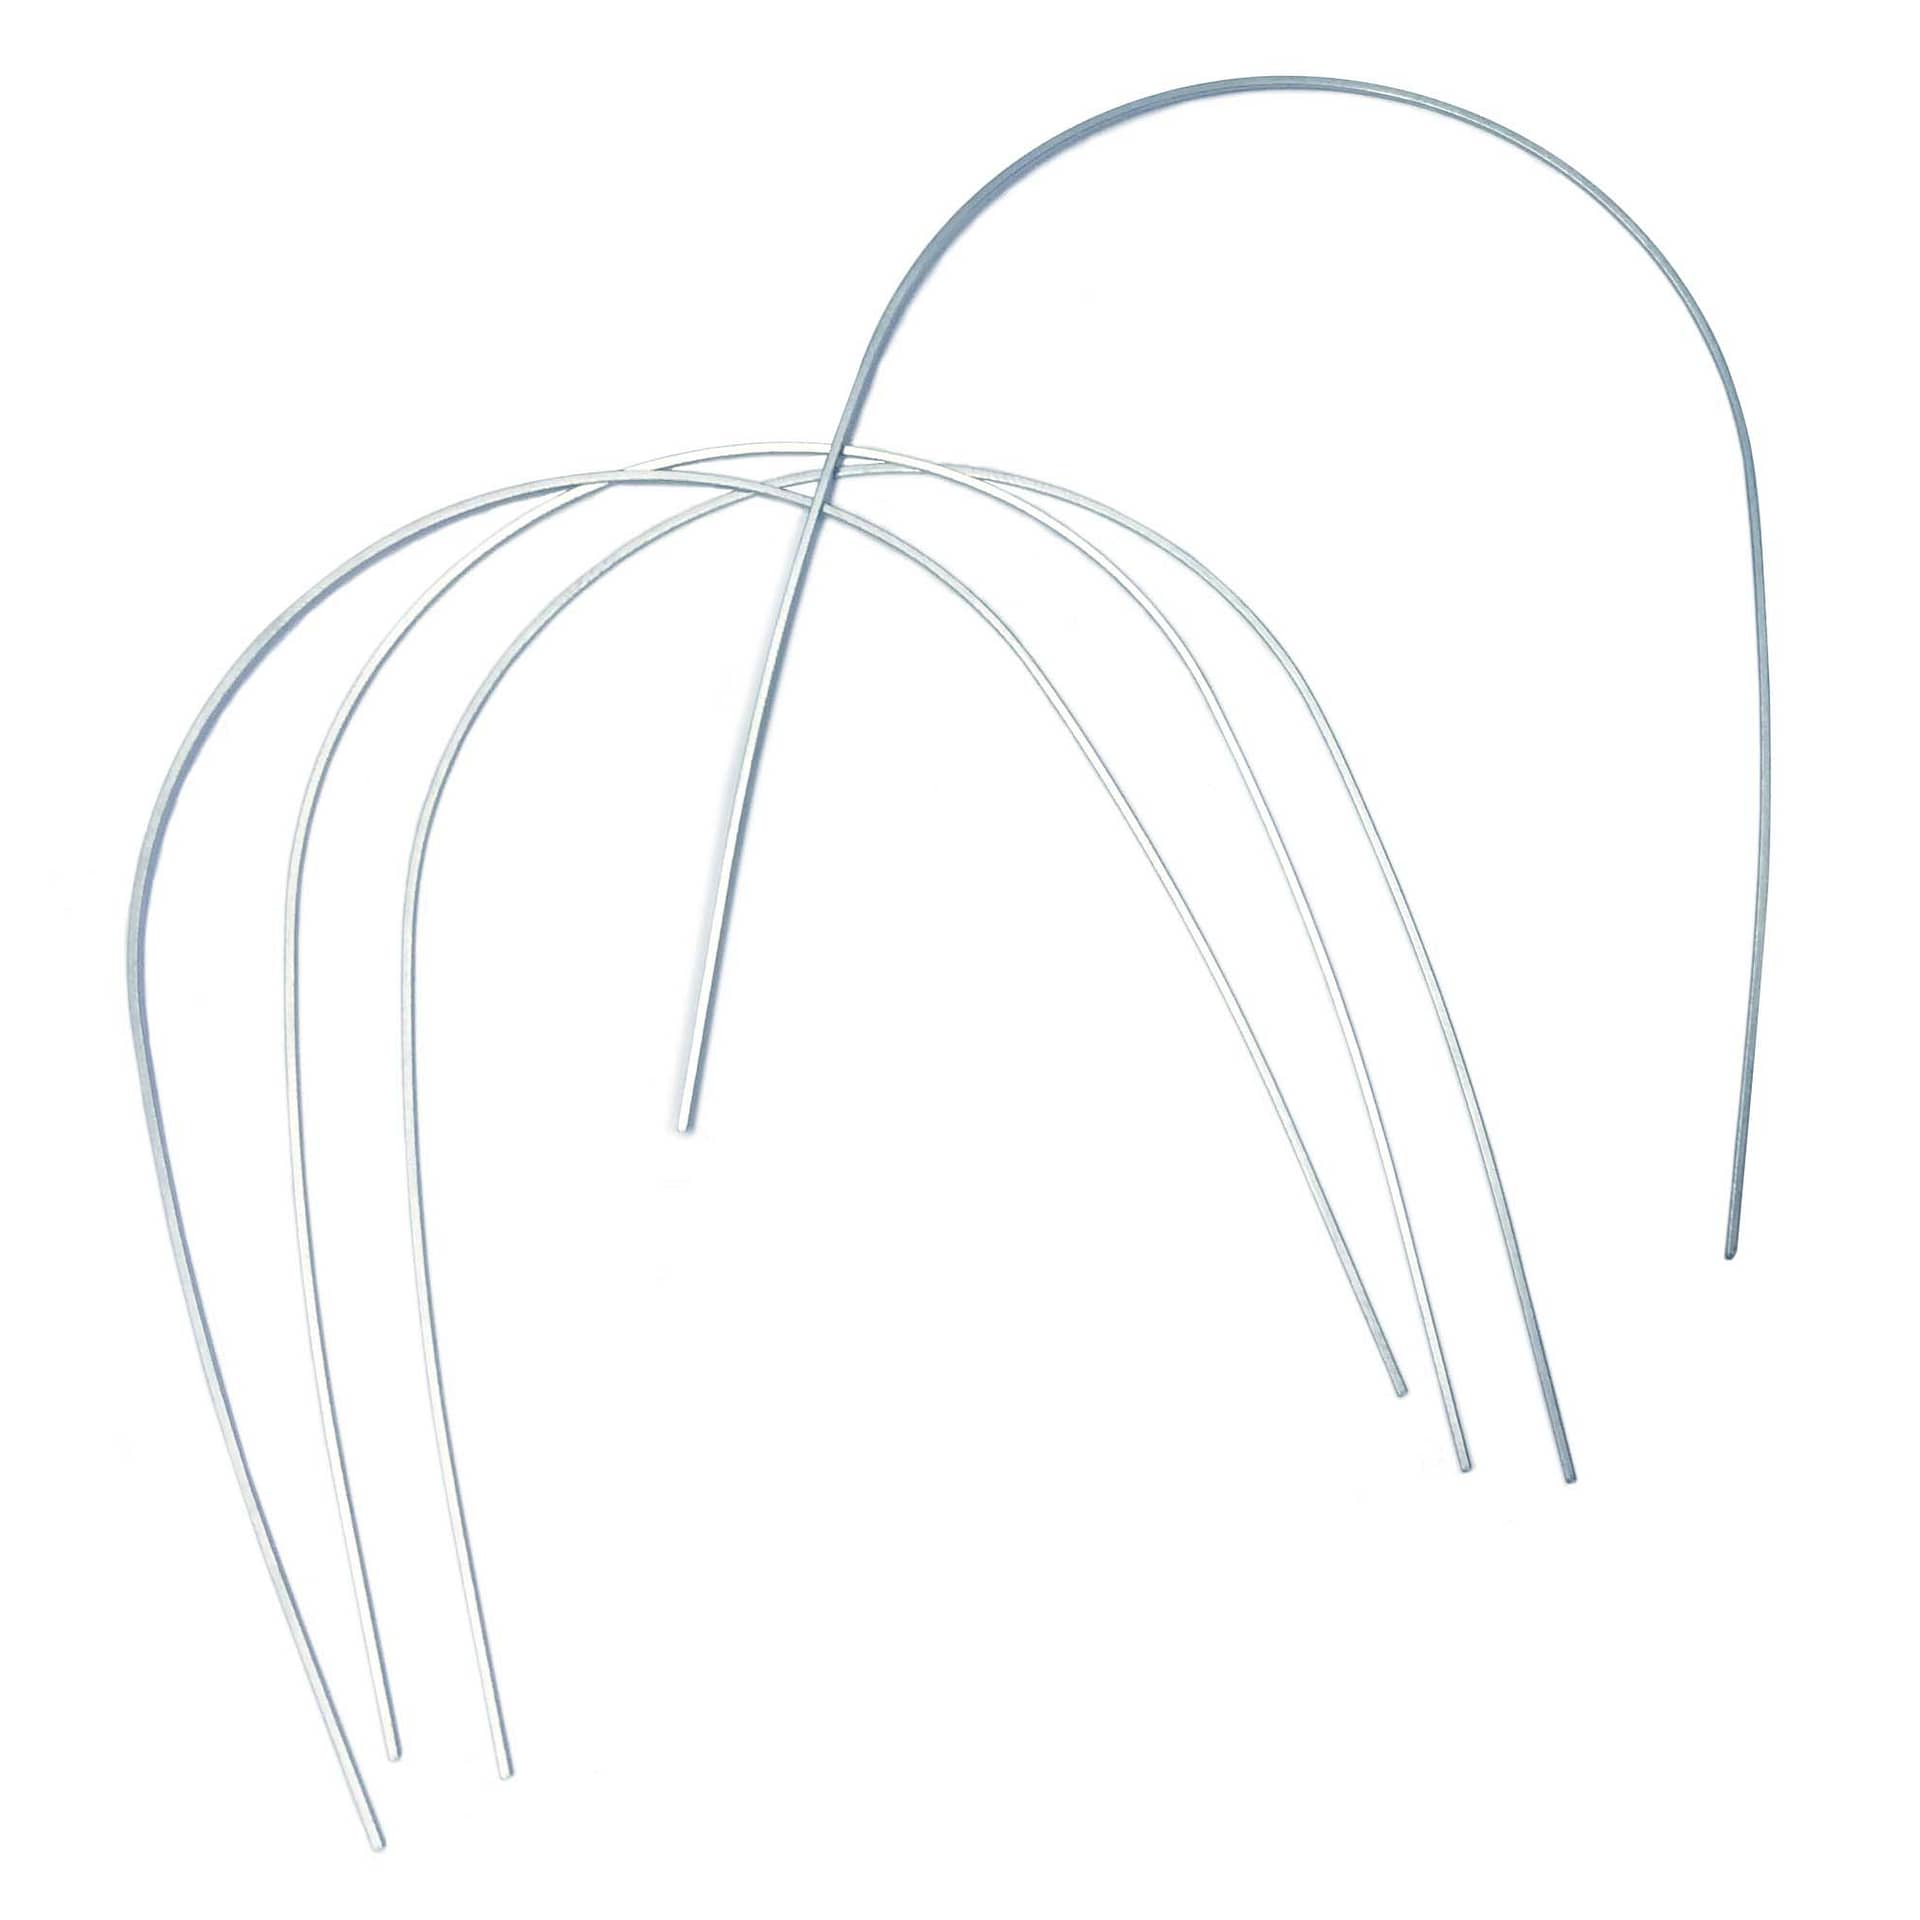 Super Elastic Nitinol Orthodontic Wire - Round - (Pk 100)